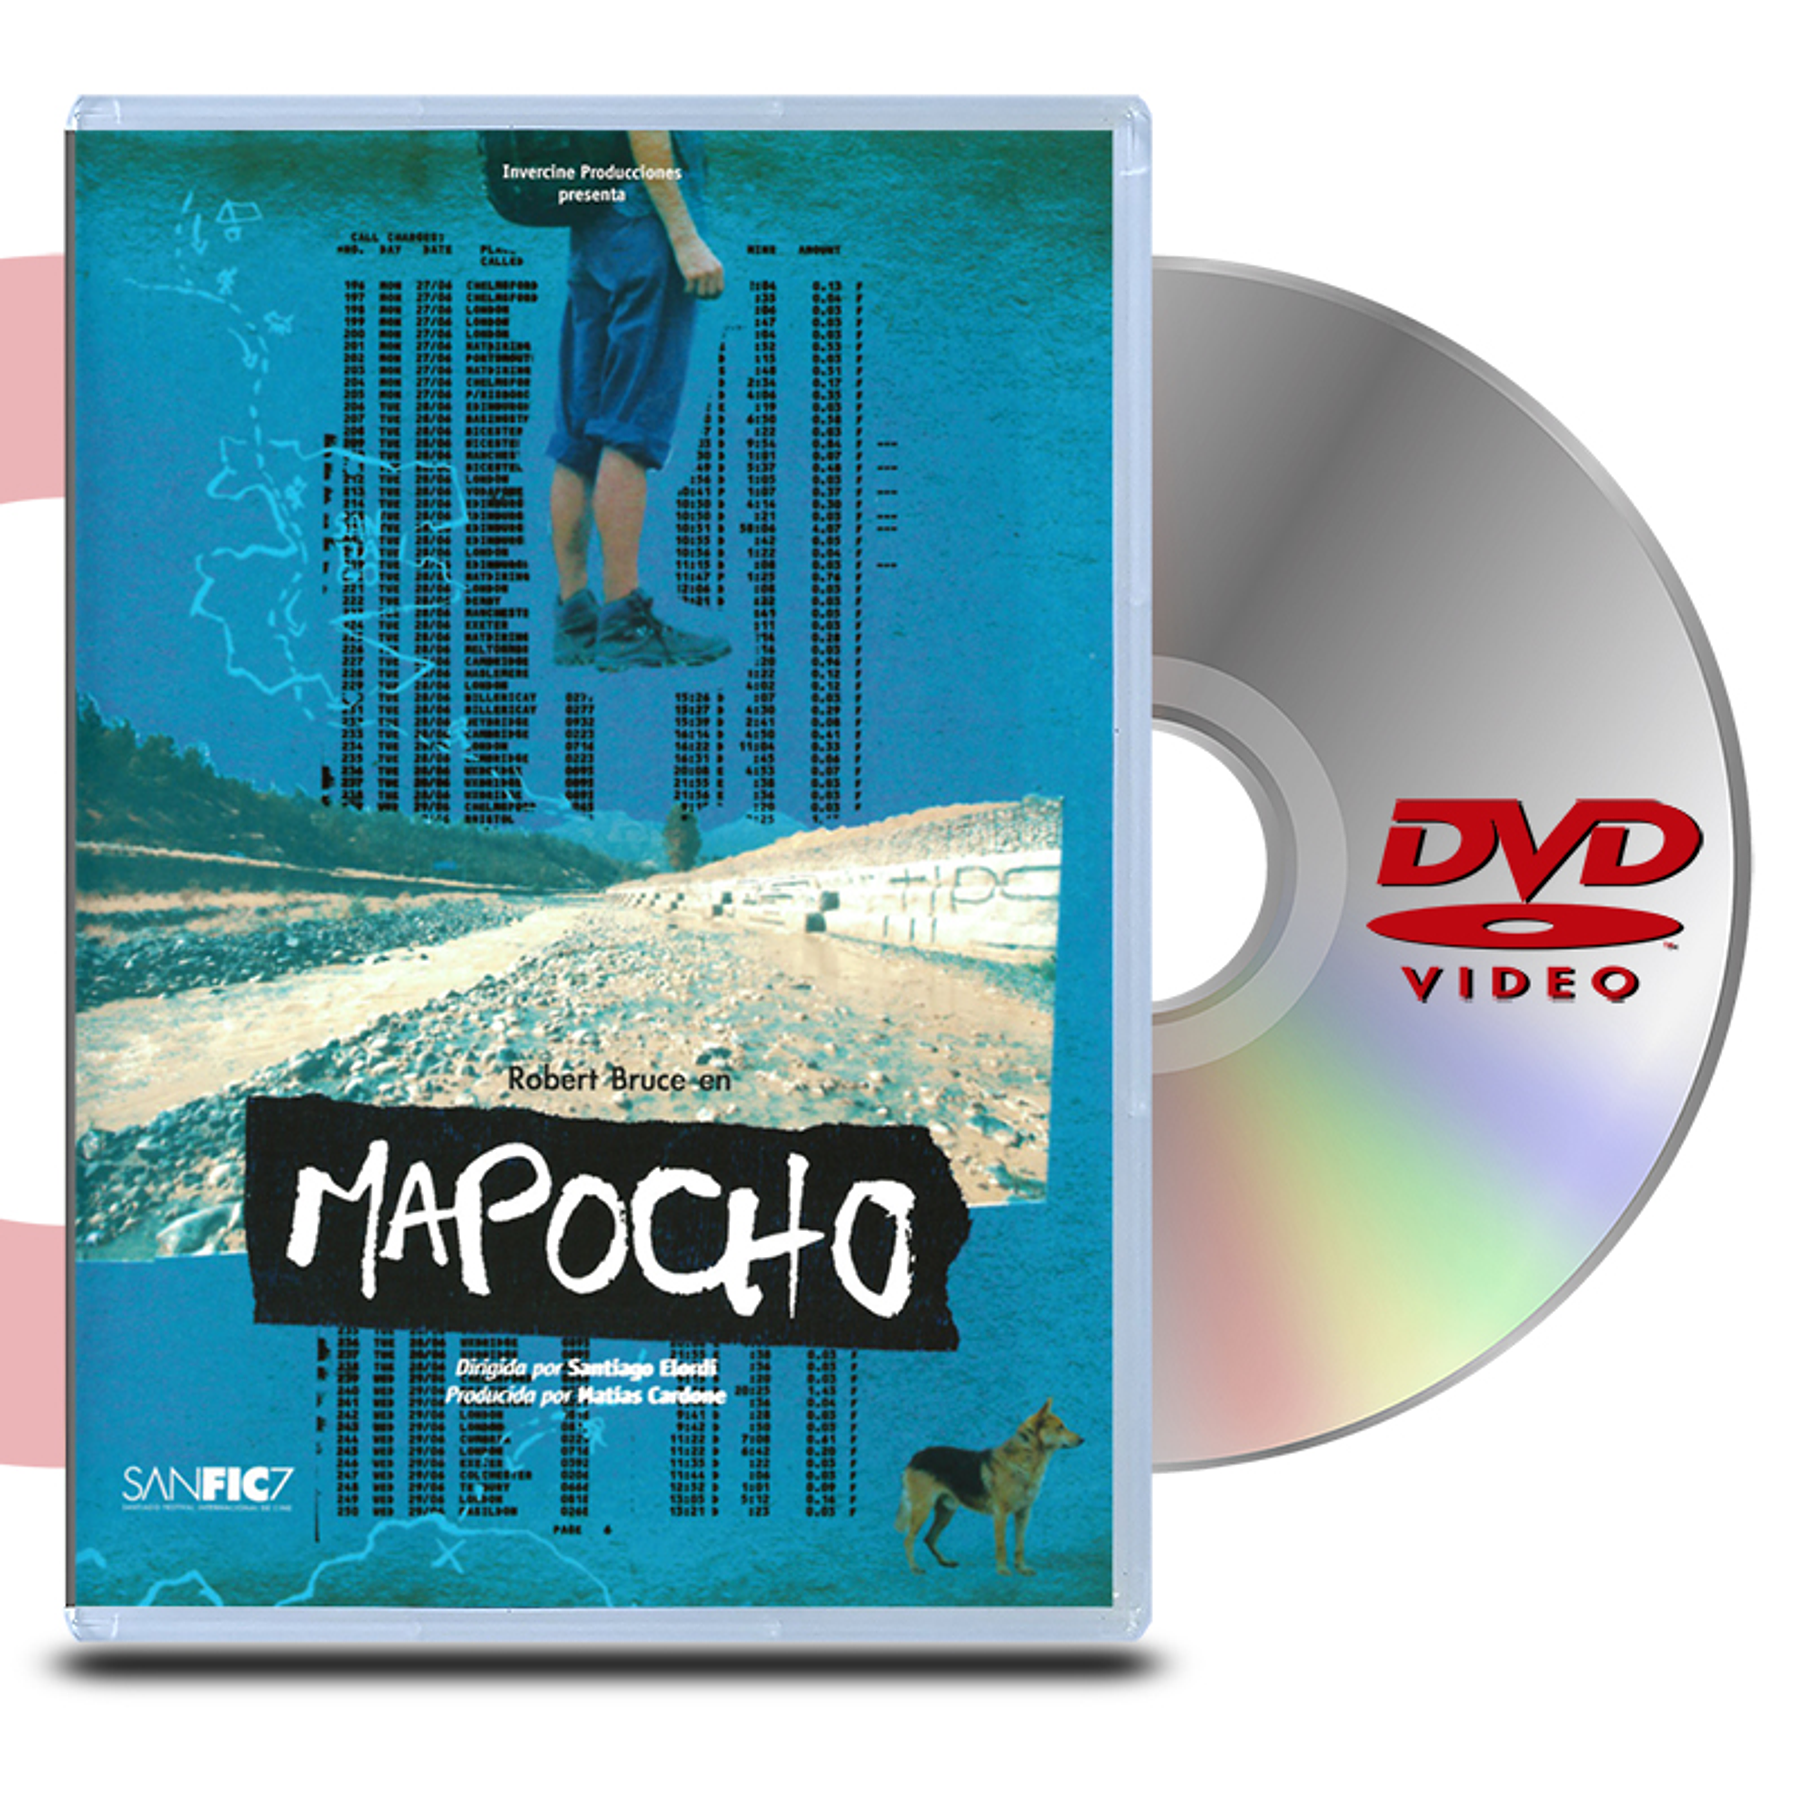 DVD MAPOCHO